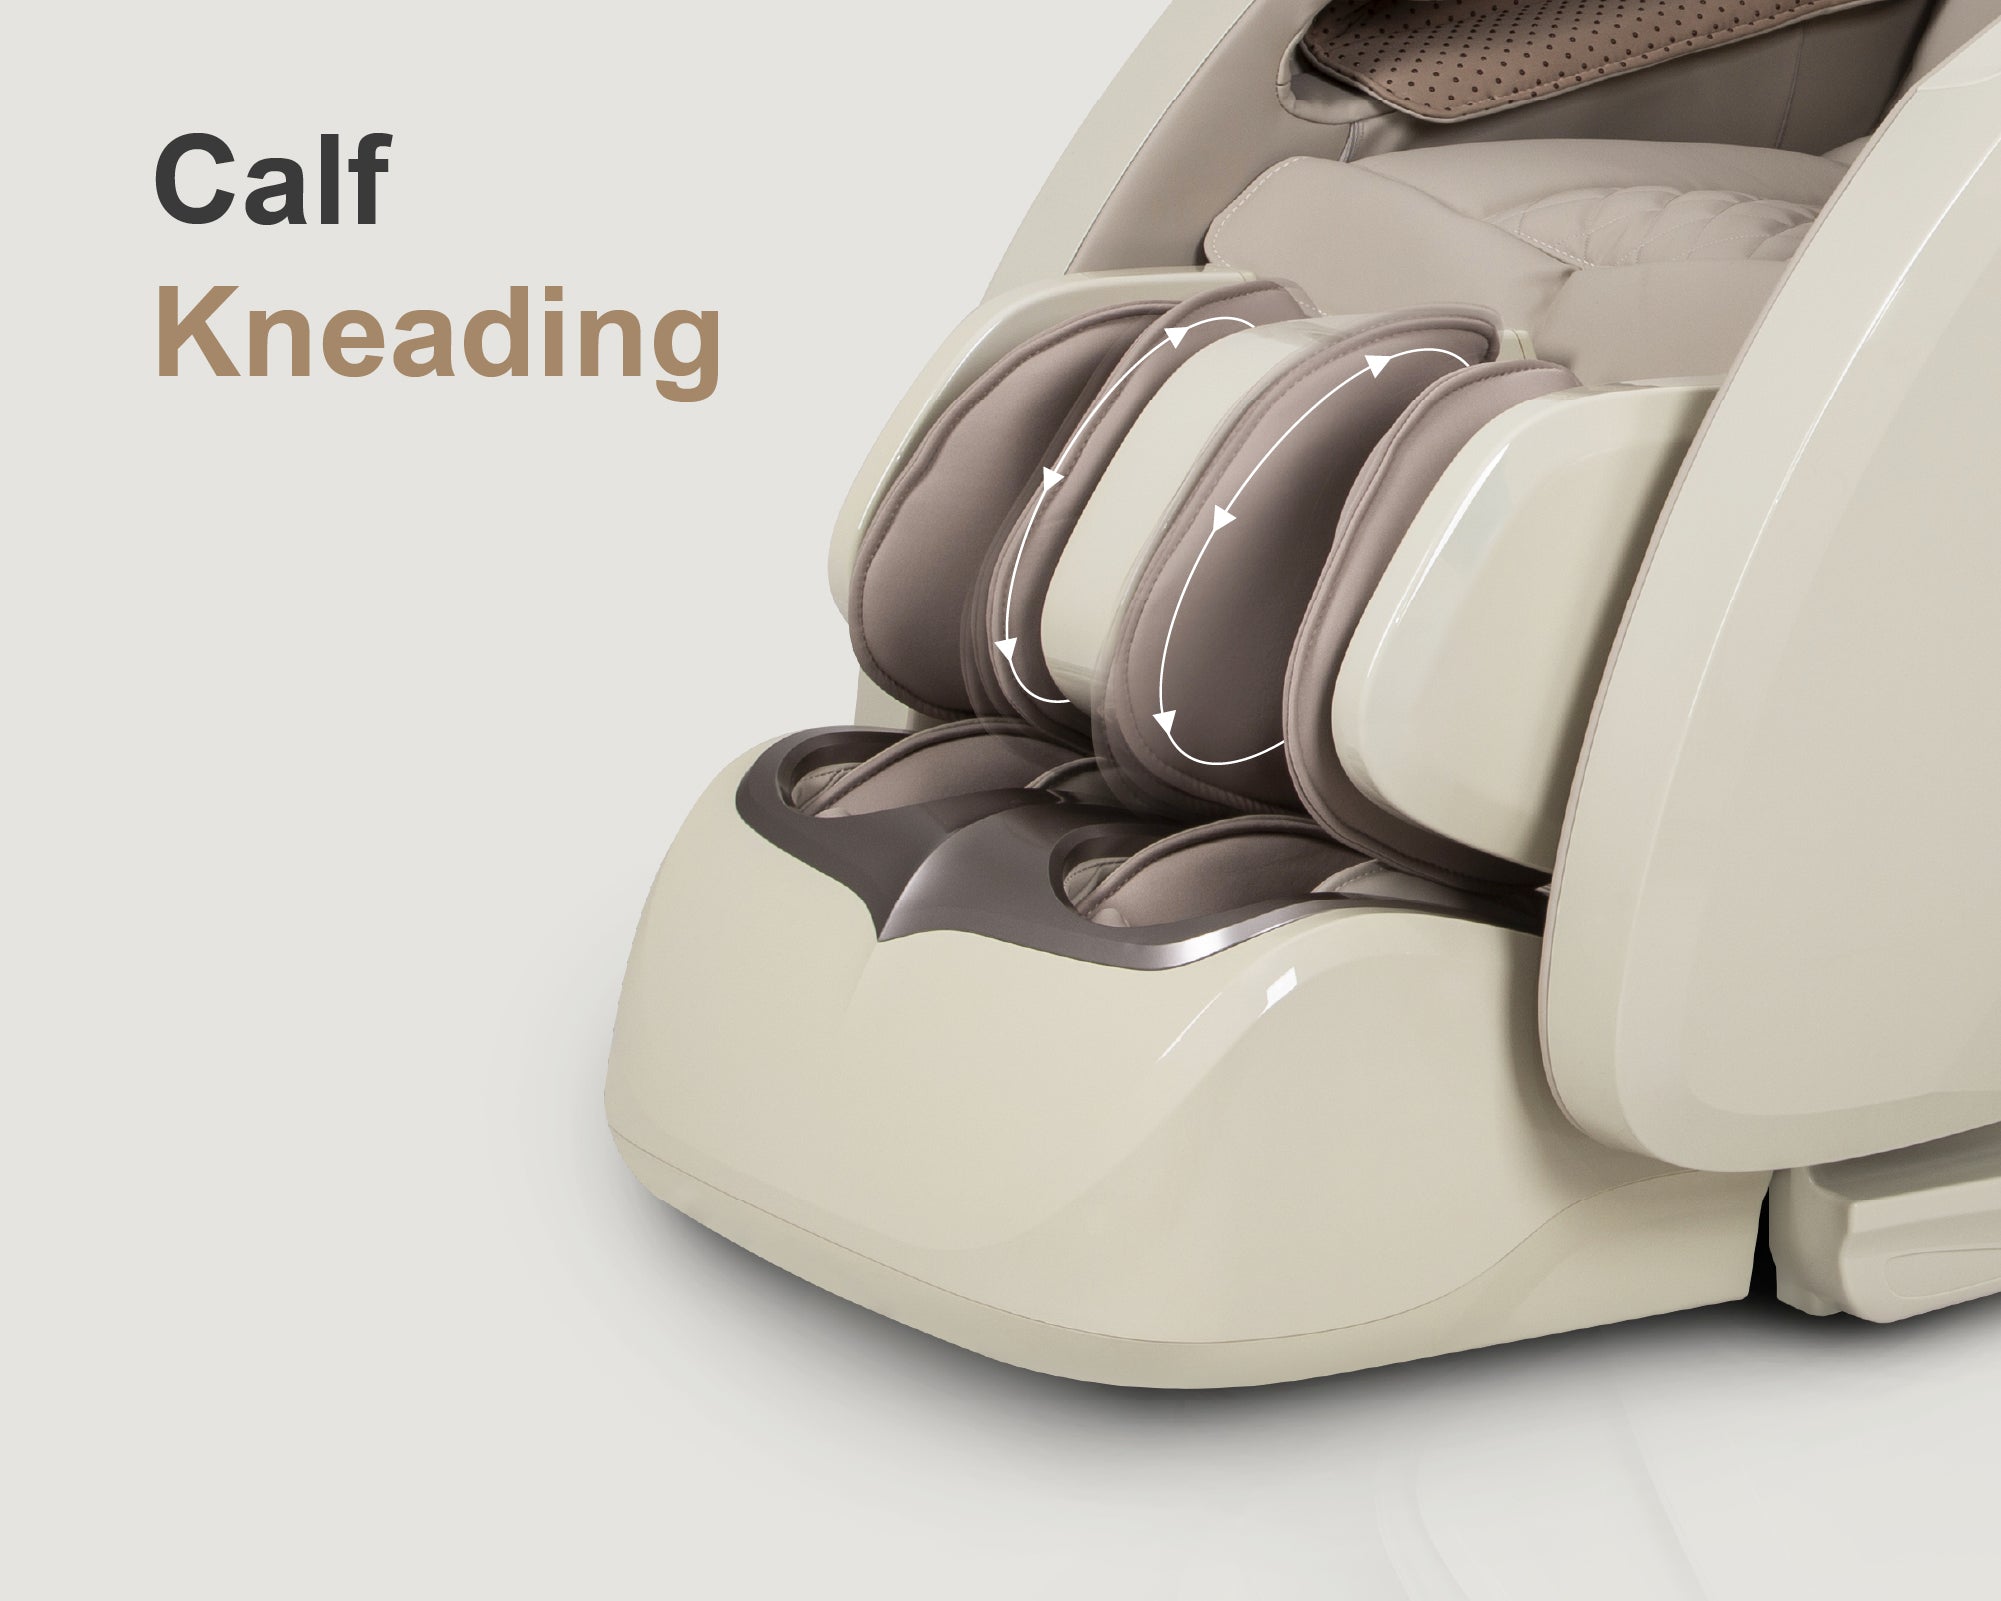 Osaki OS-Pro 3D Tecno Full Body Massage Chair, Calf Kneading